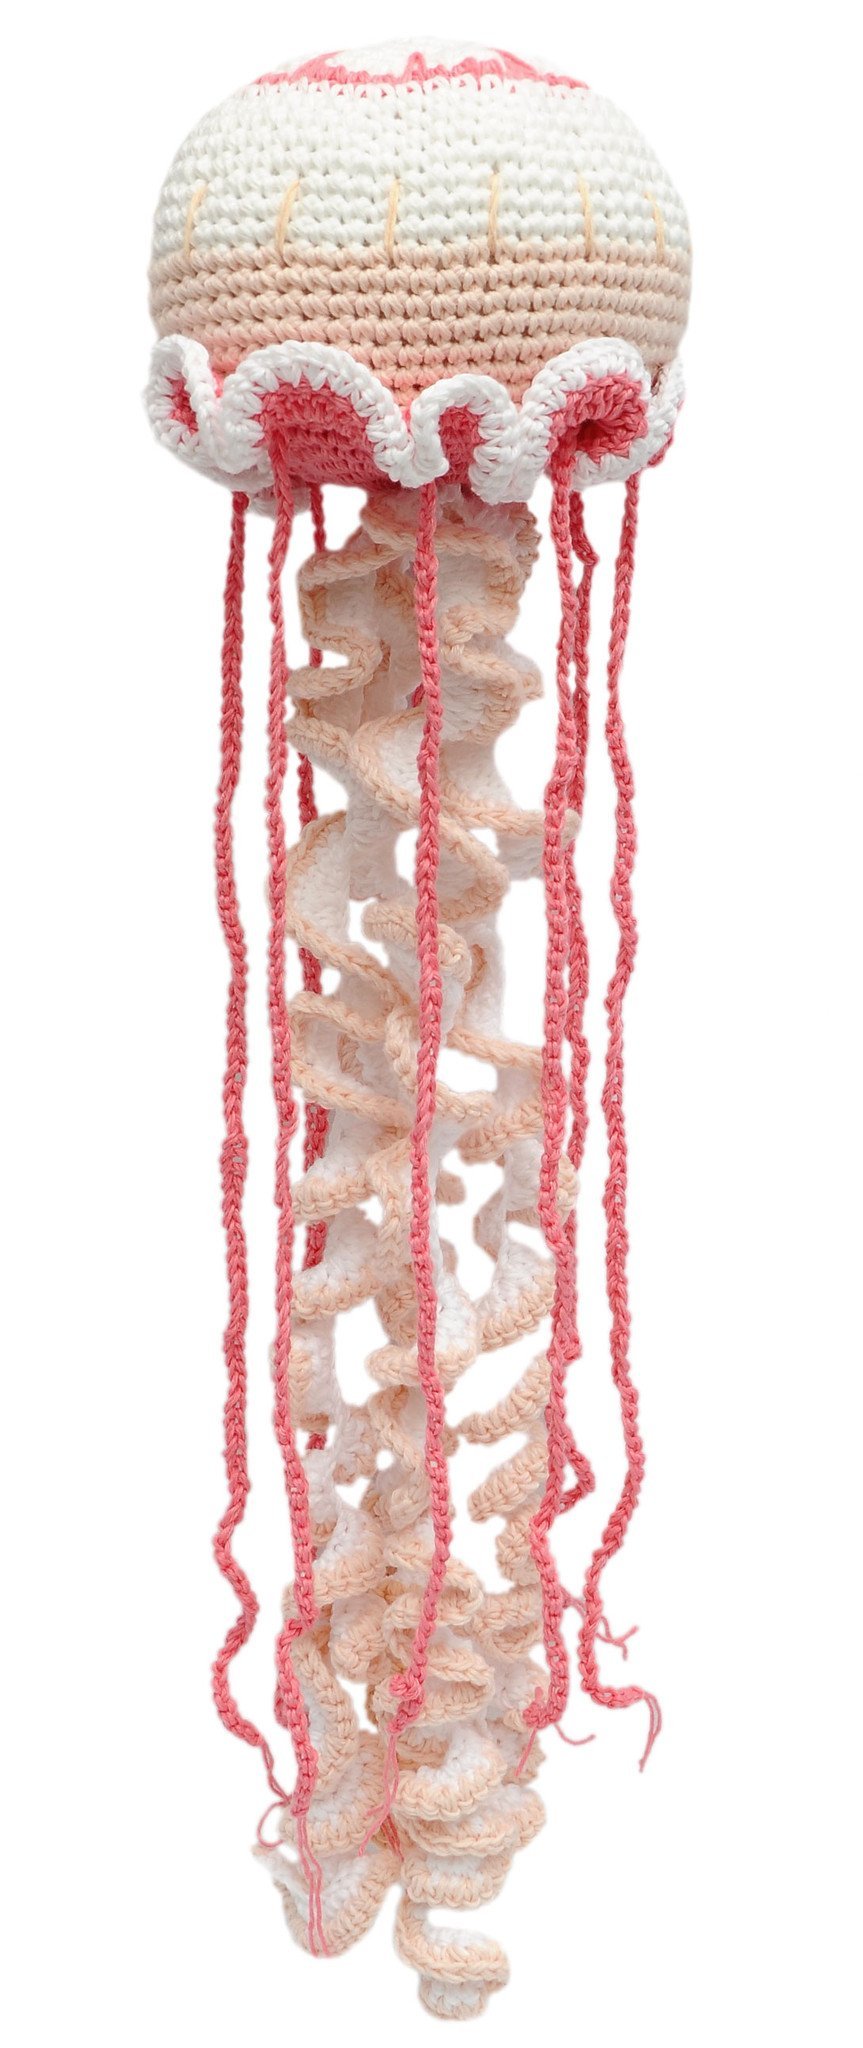 Pink;Blue;Orange Jellyfish Handmade Amigurumi Stuffed Toy Knit Crochet Doll VAC